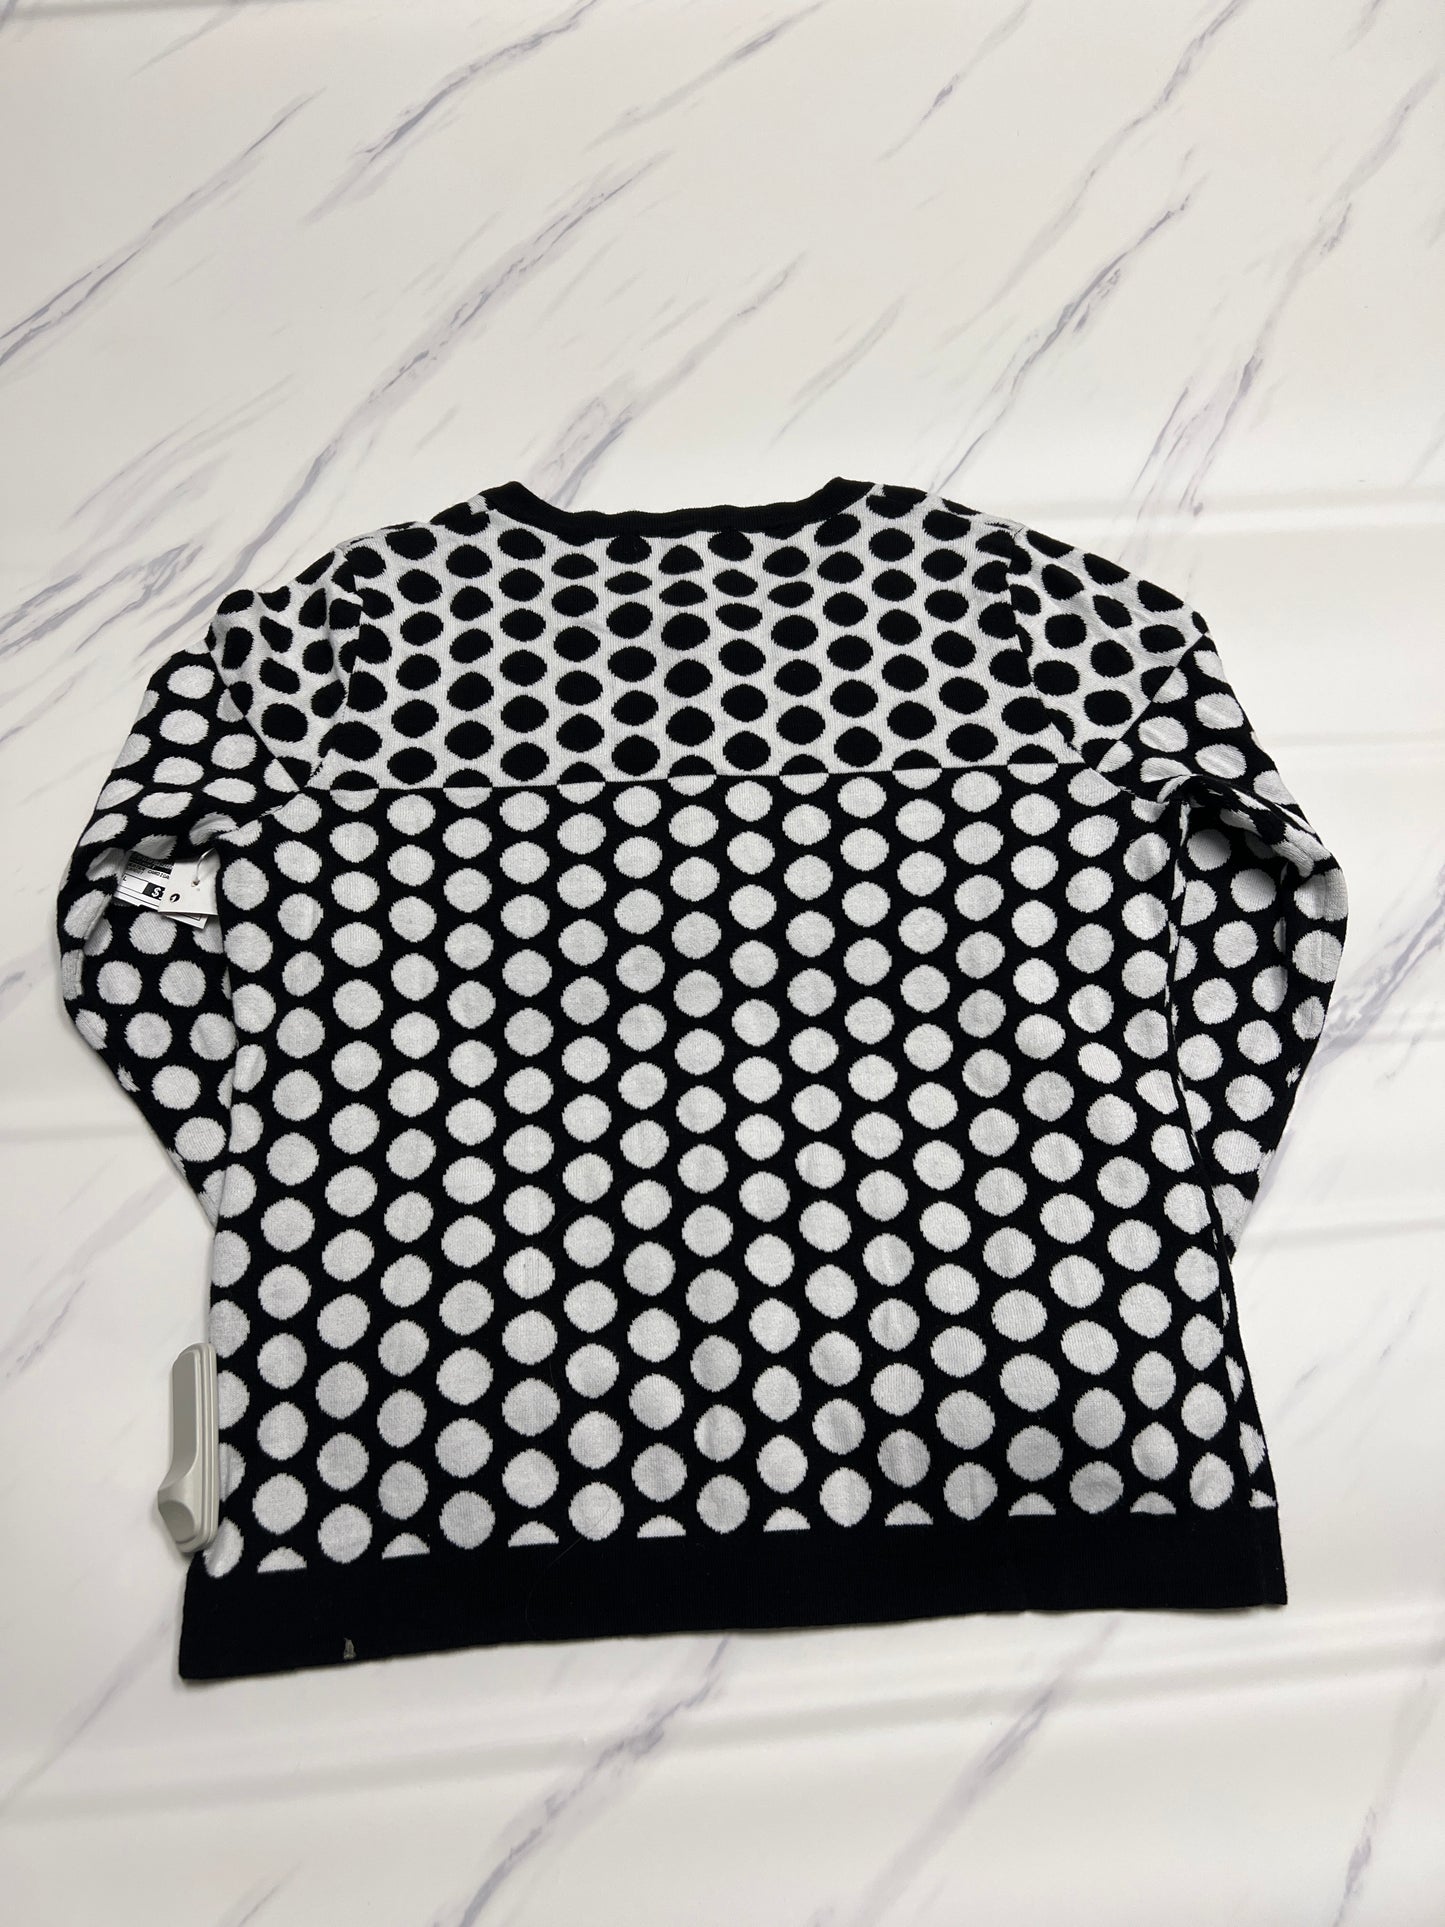 Sweater Cardigan By Foxcroft  Size: L